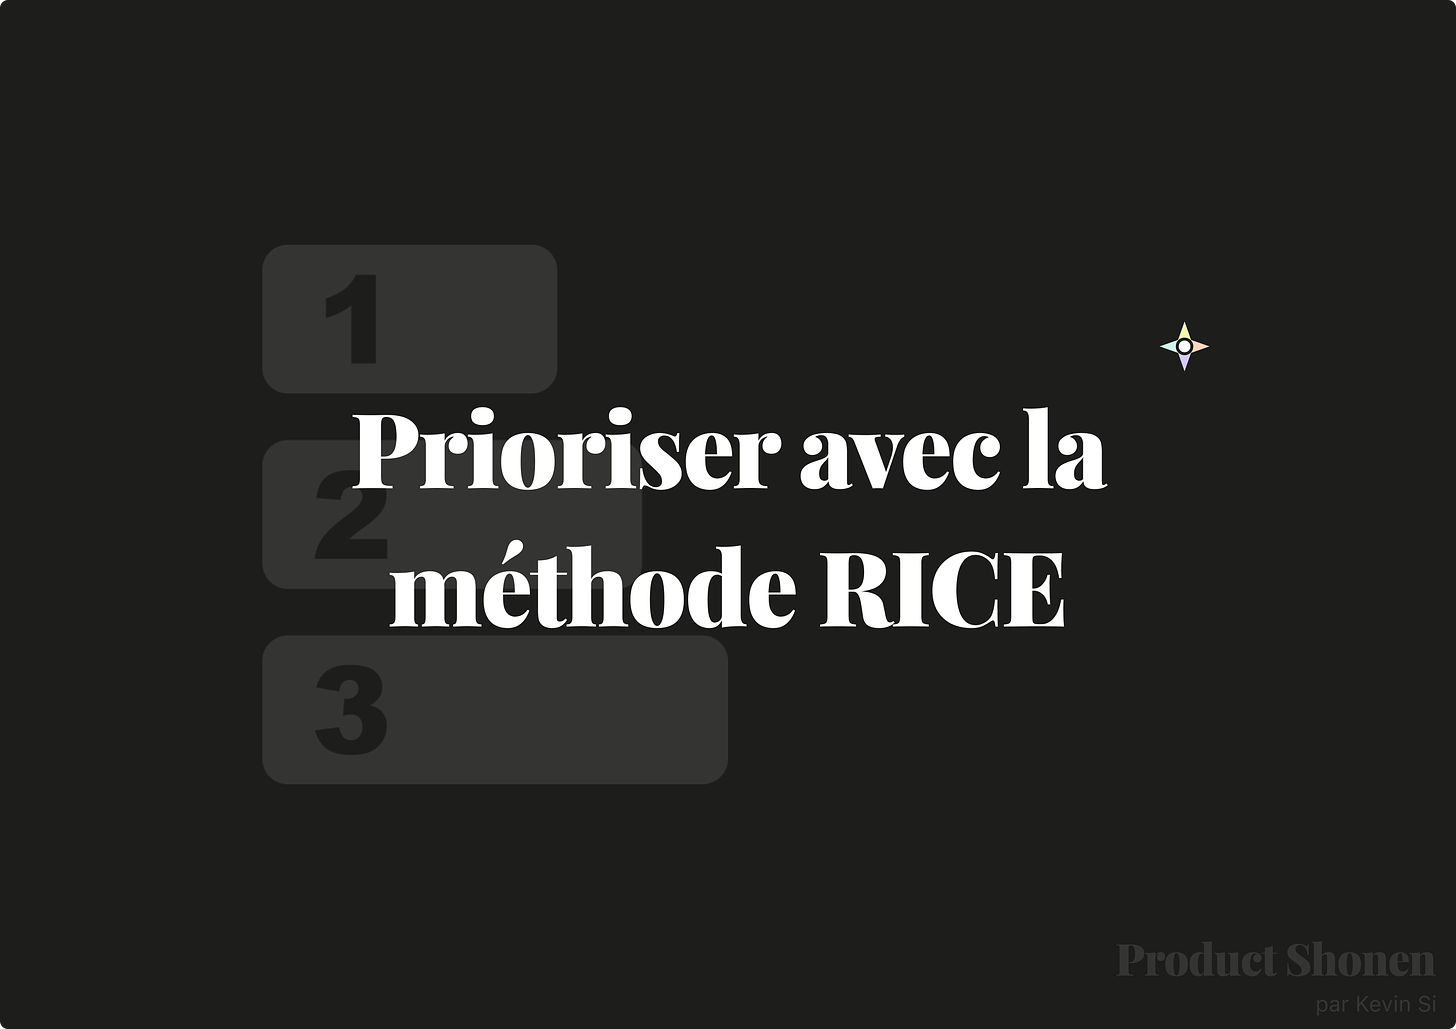 Prioriser son product backlog avec la méthode RICE - Product Shonen - Kevin SI